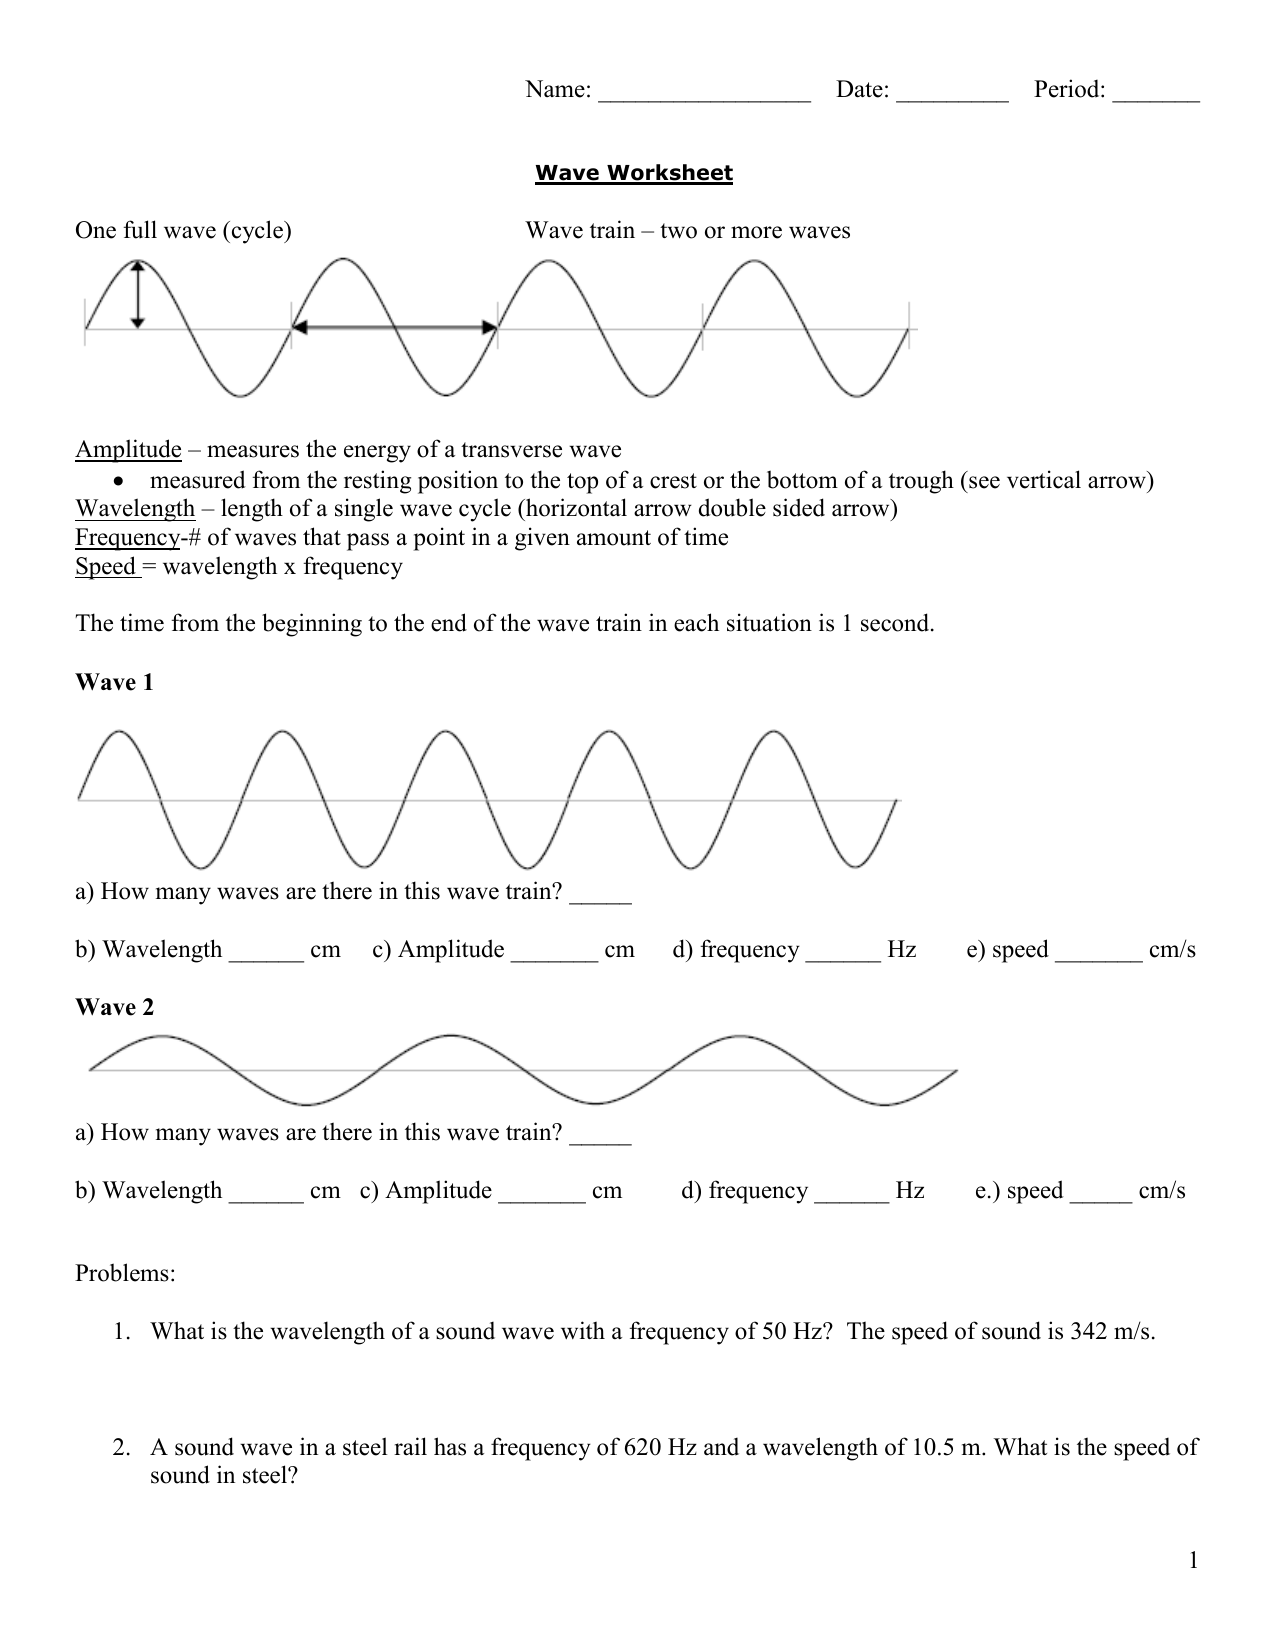 Waves And Sound Worksheet - Pdf Sound Waves Worksheet Alu Ban Academia